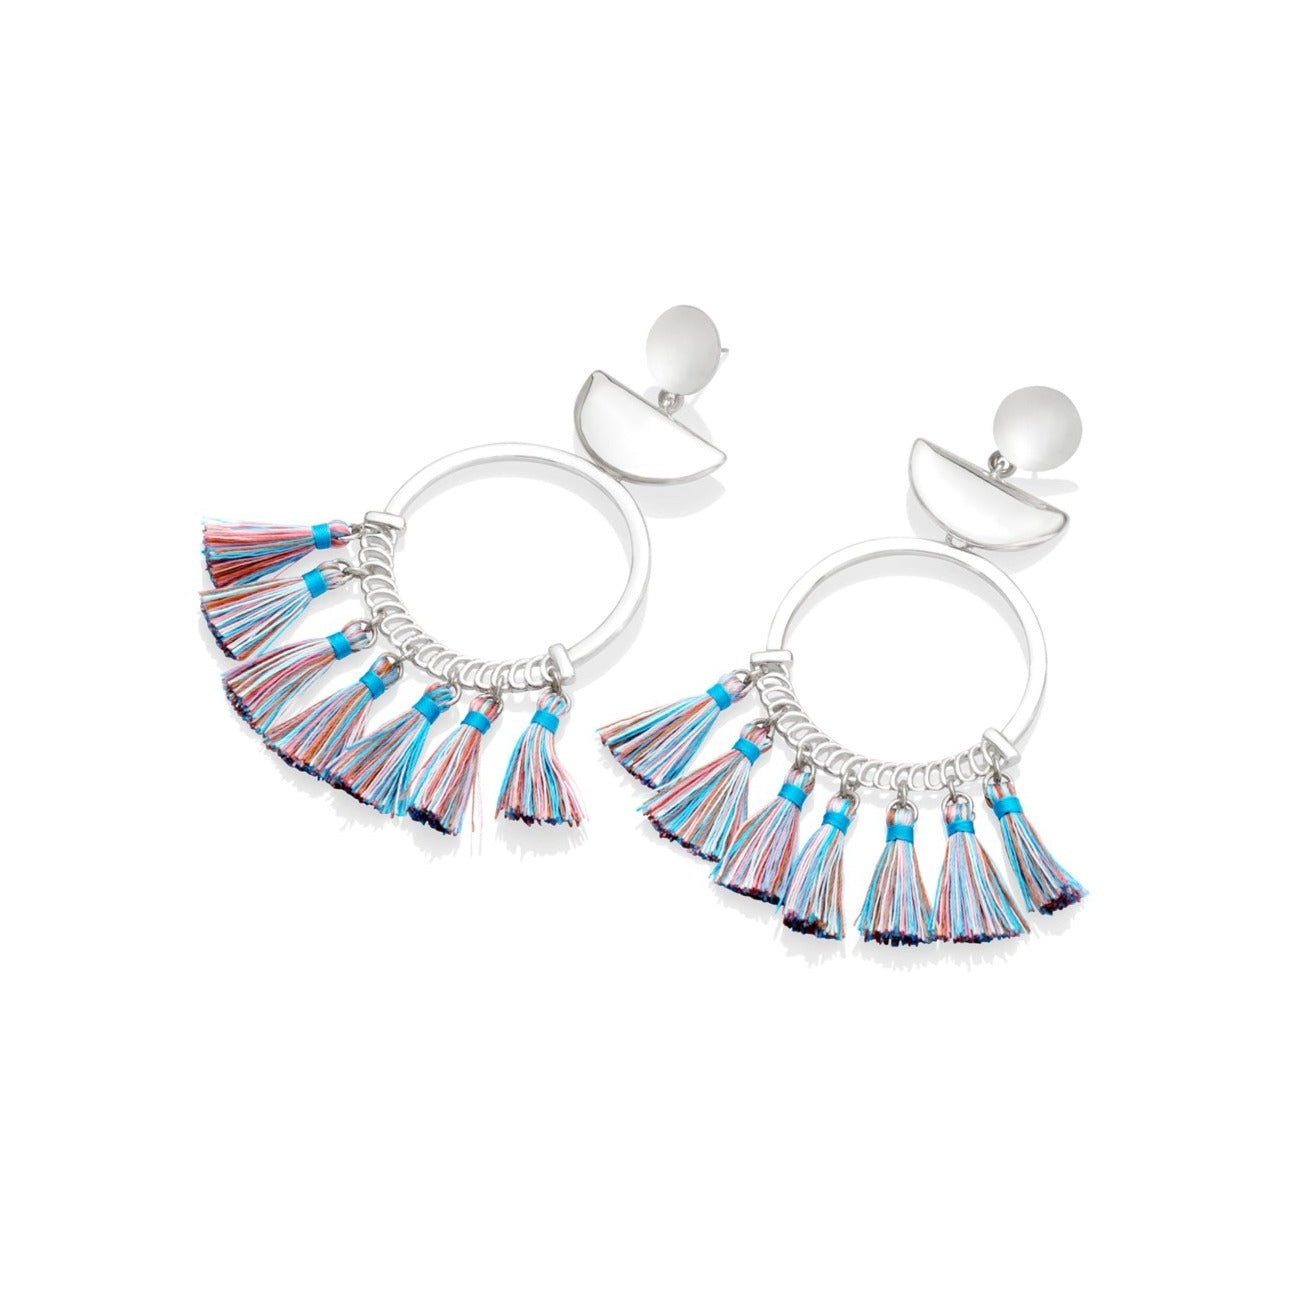 Silver plated hoop earrings with multi-colored tassels